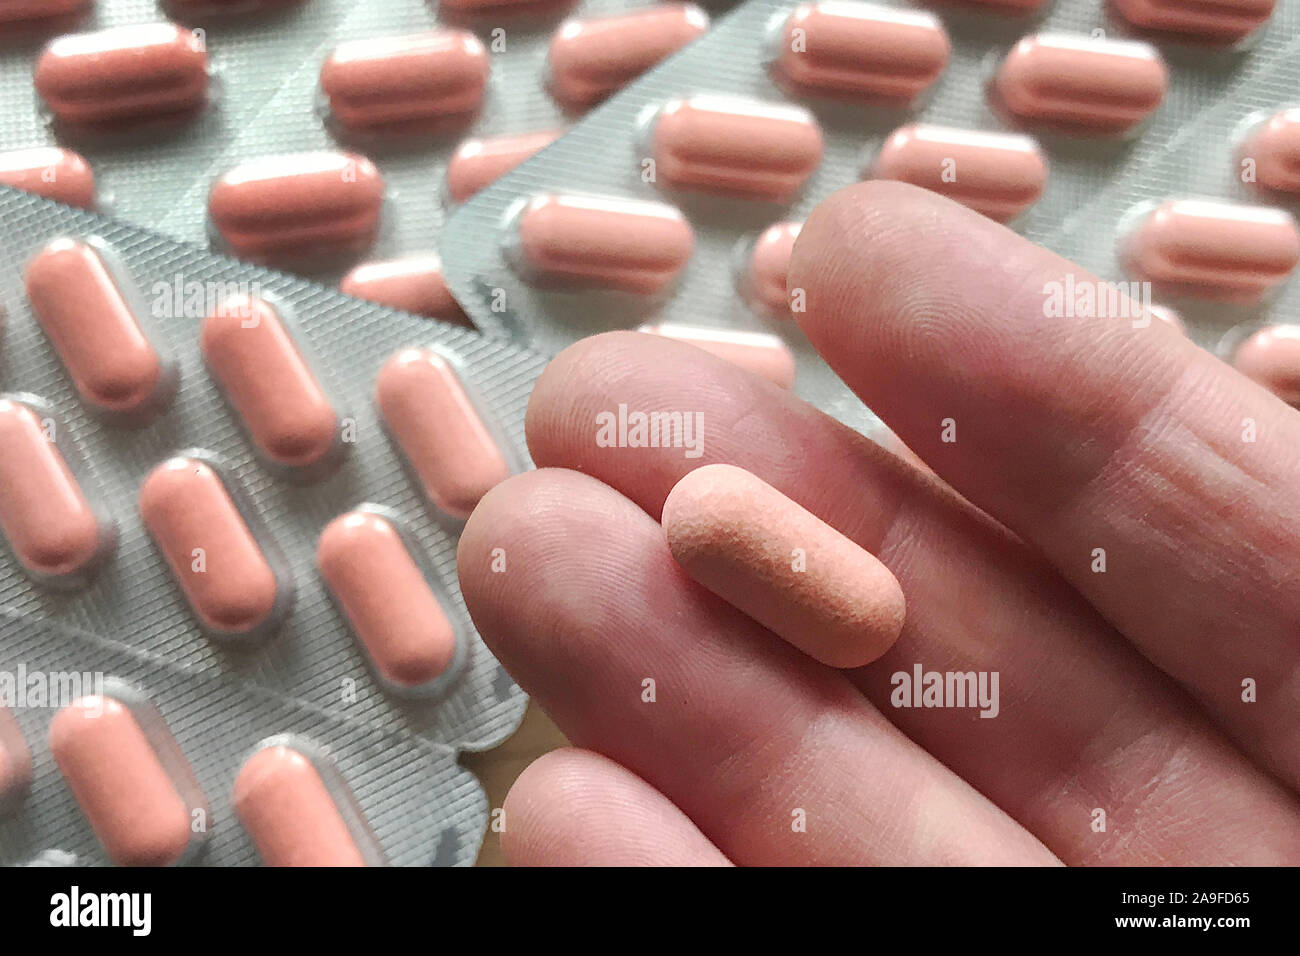 Munich, Deutschland. 15th Nov, 2019. Topic Taking pills, medications, pills. | usage worldwide Credit: dpa/Alamy Live News Stock Photo